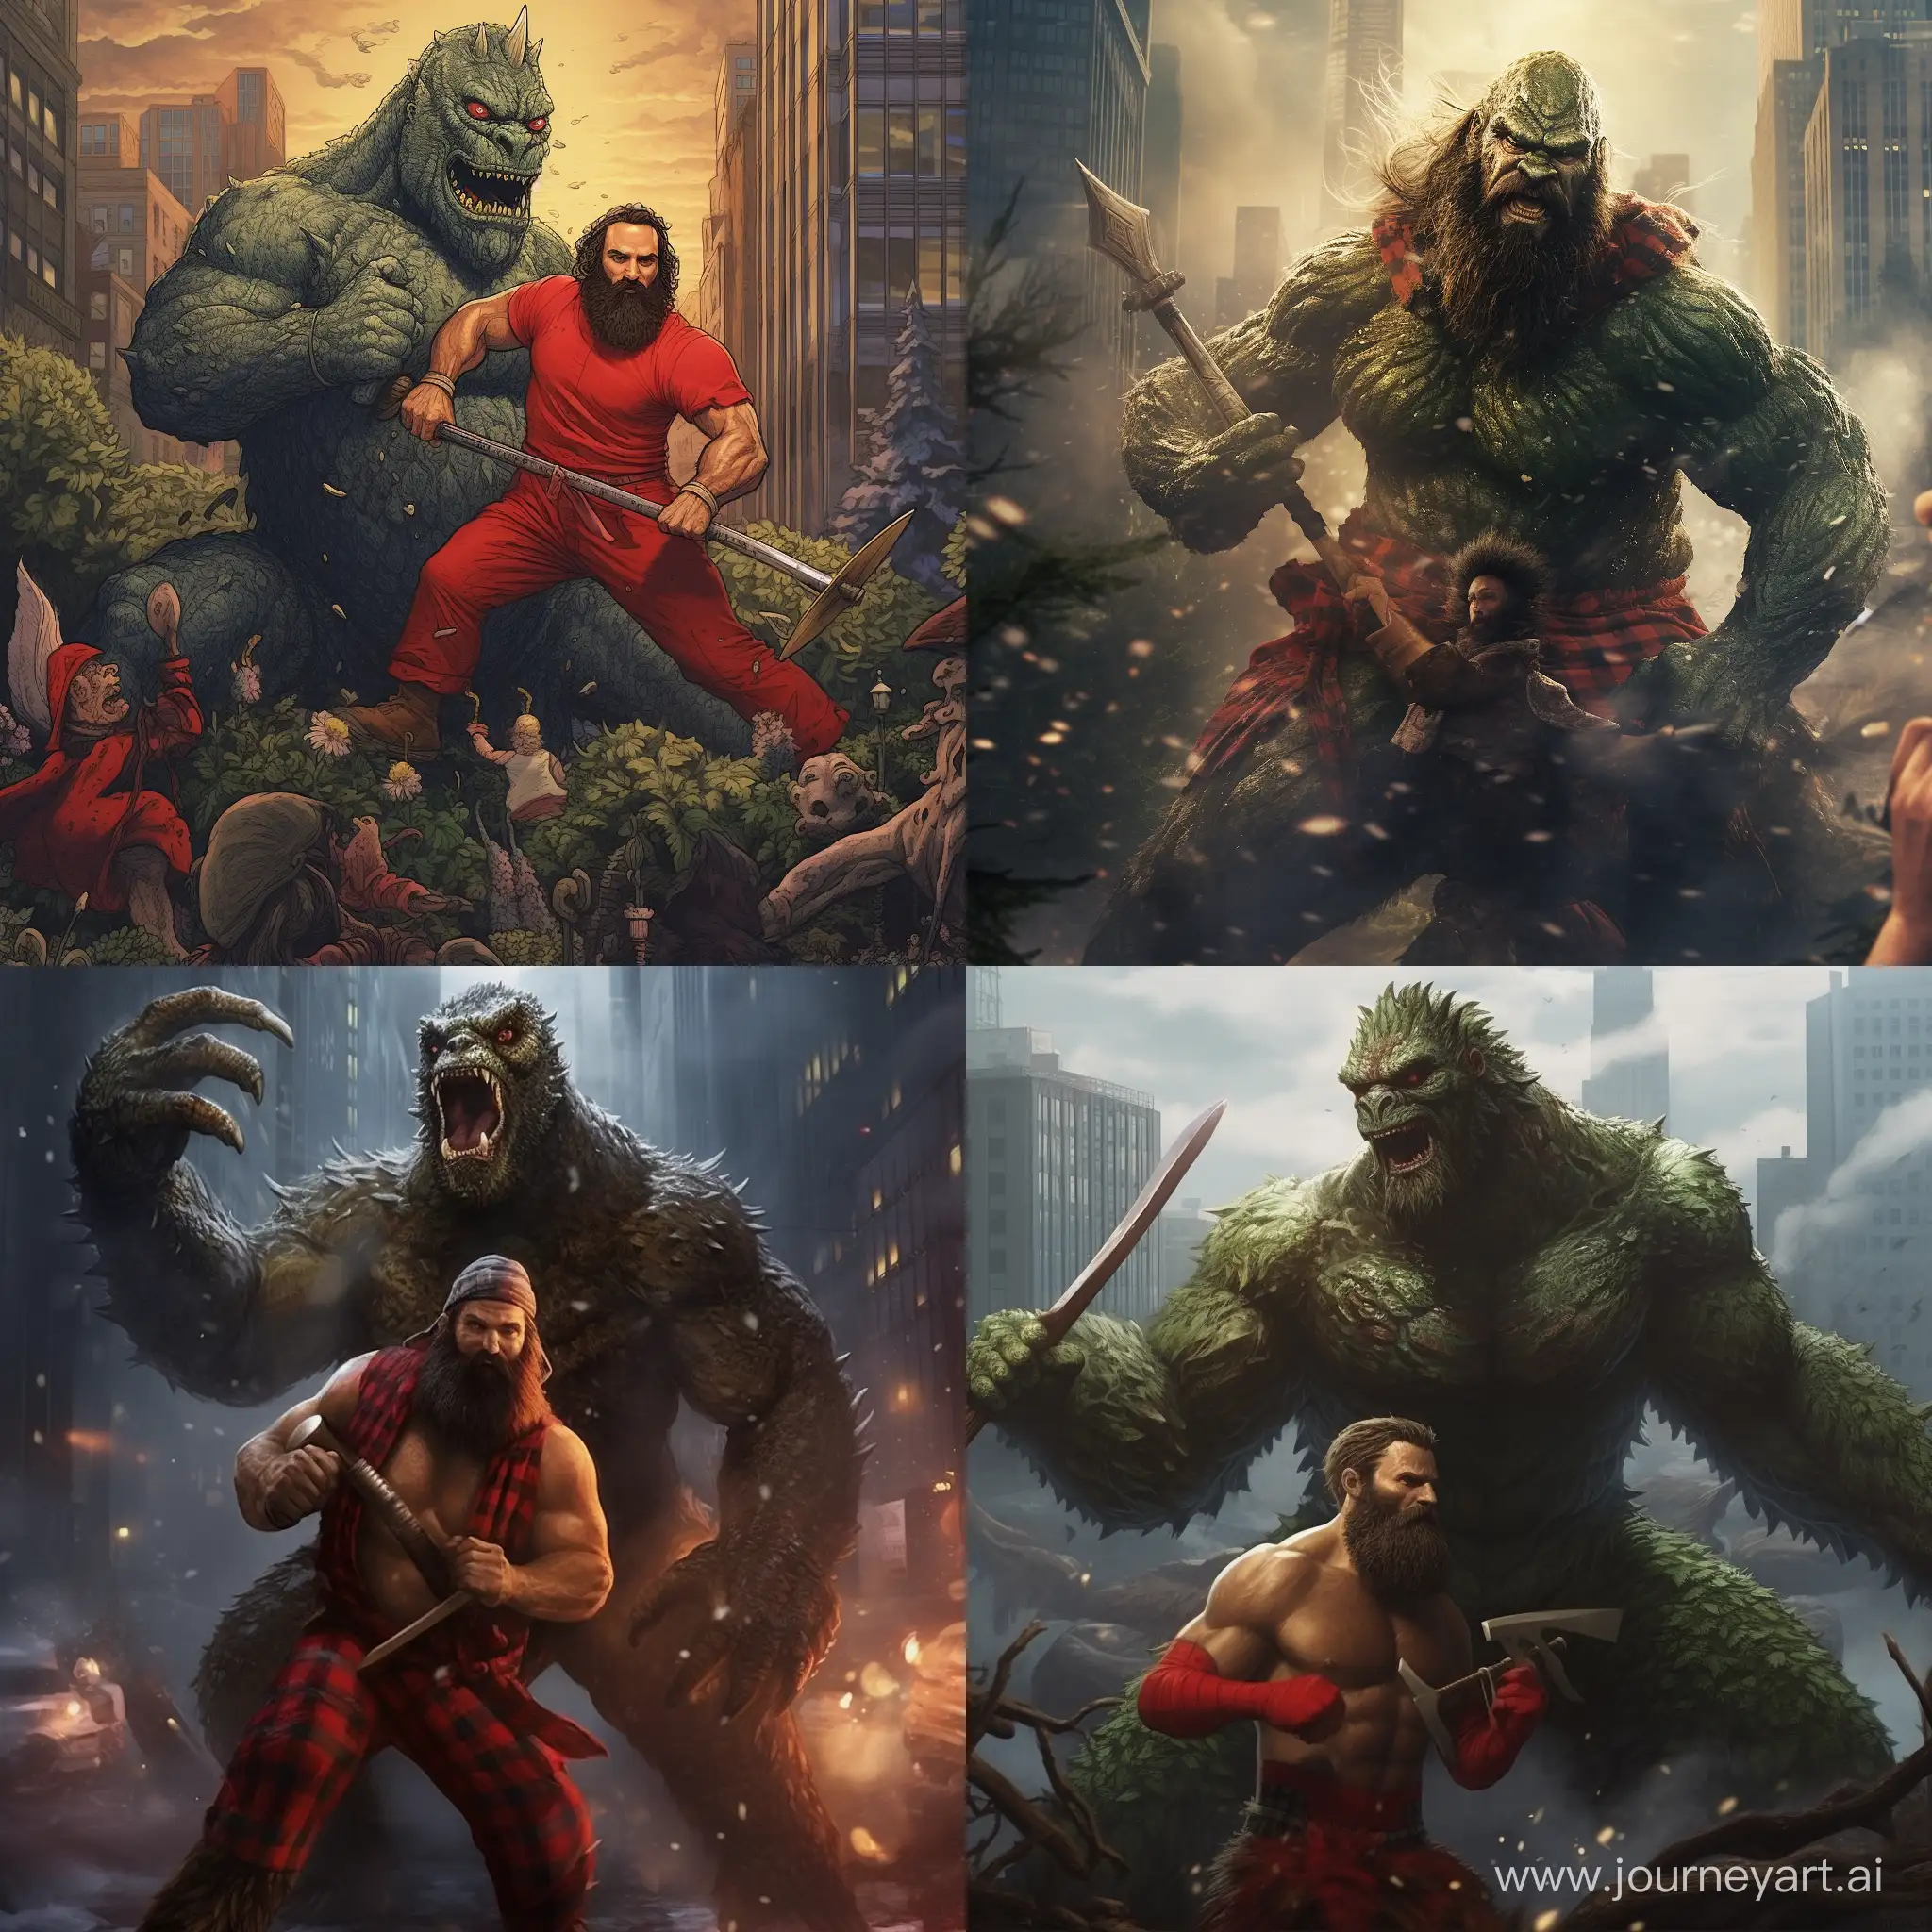 Paul-Bunyan-Battling-Godzilla-in-Epic-New-York-City-Showdown